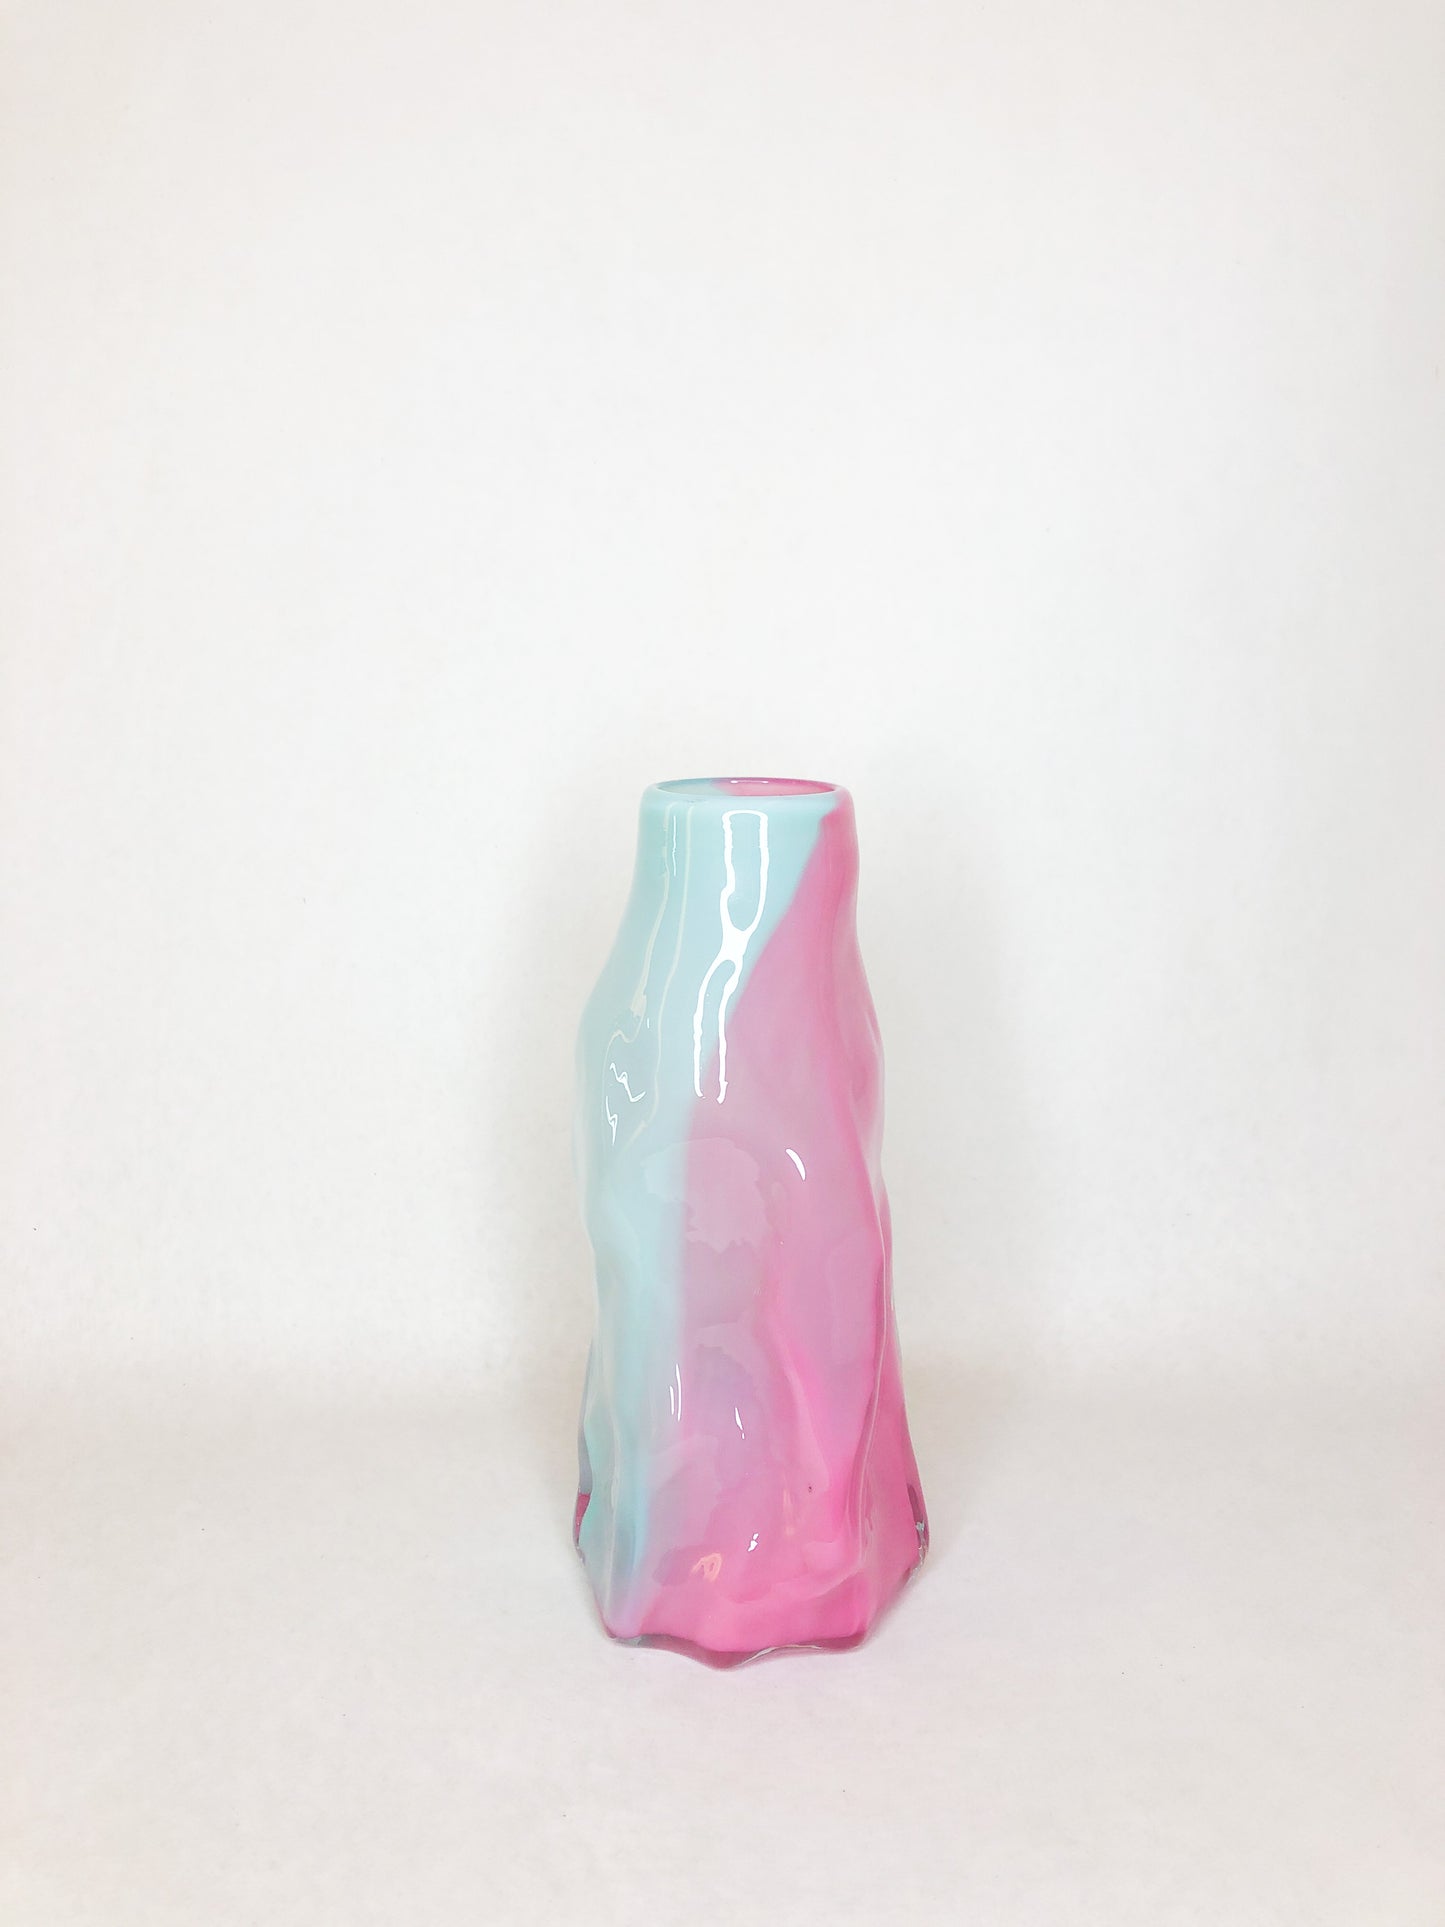 Small Glass Vase no. 115